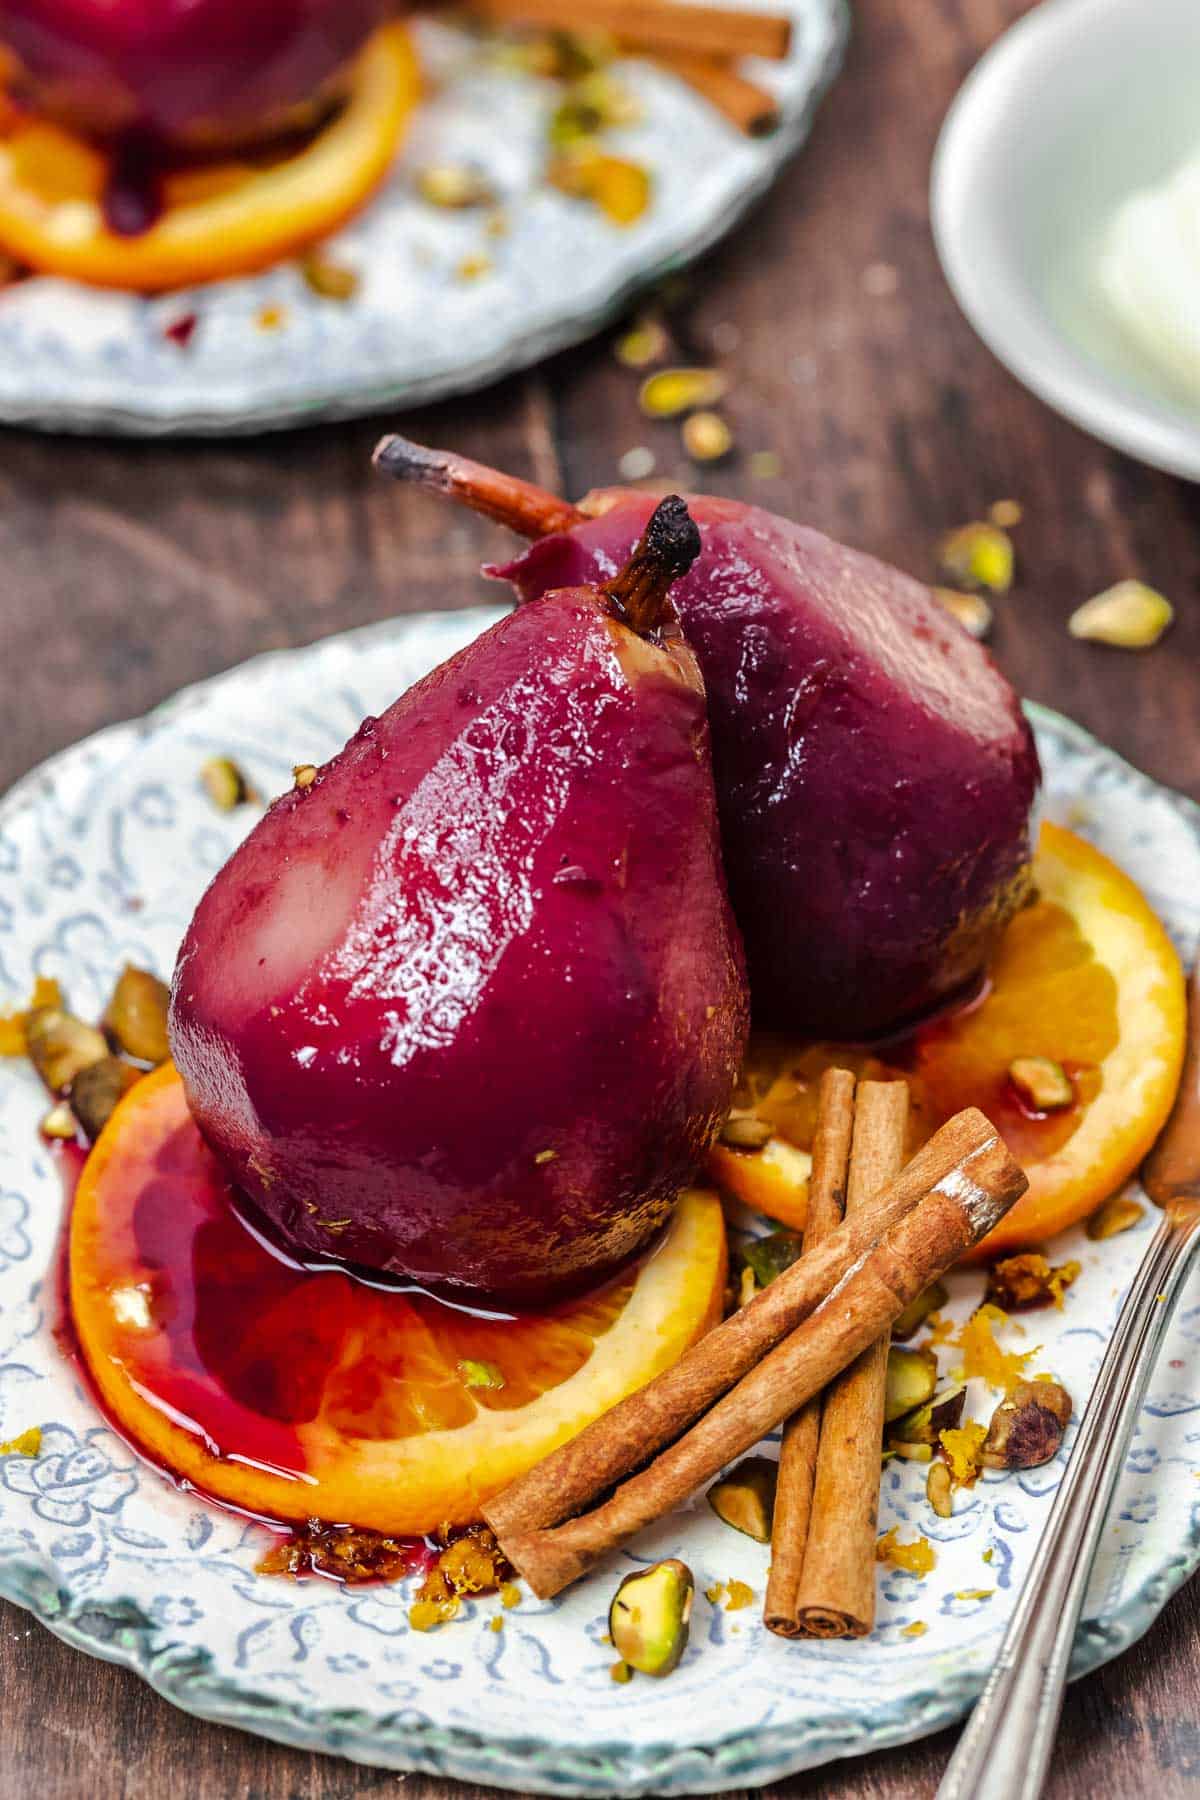 https://www.themediterraneandish.com/wp-content/uploads/2022/10/poached-pears-recipe-4.jpg